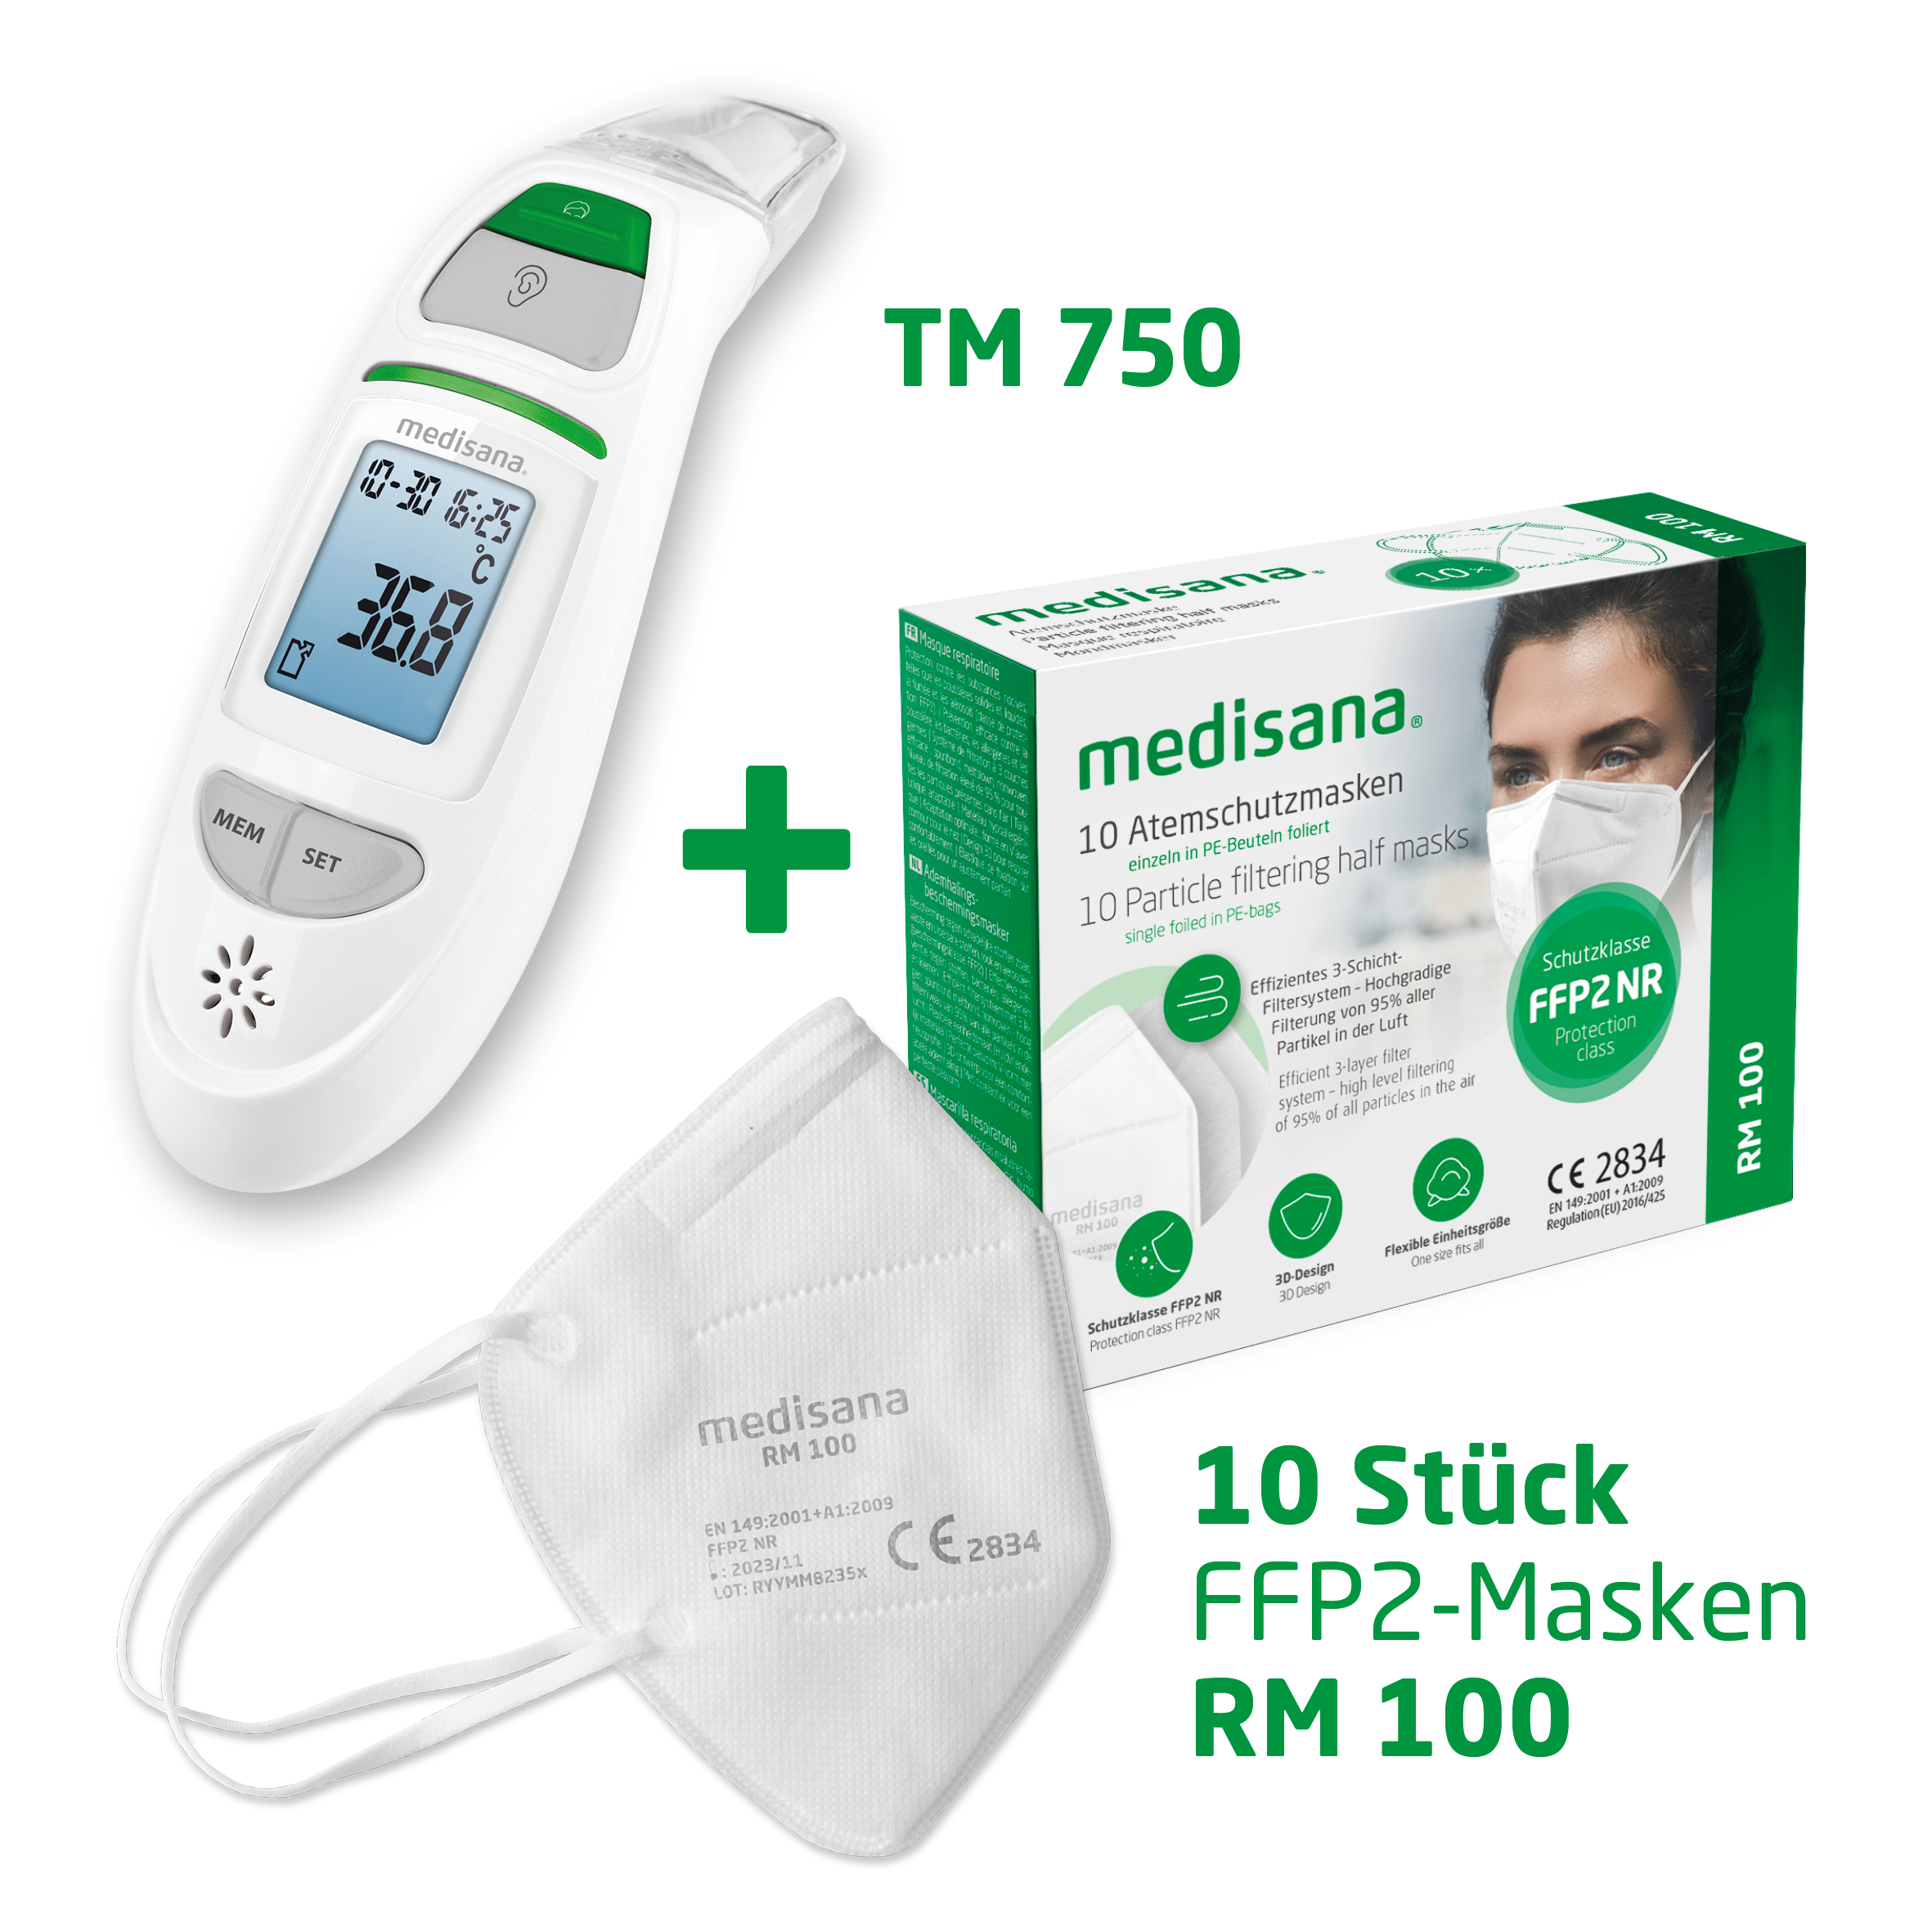 Infrared multifunctional medisana® 750 TM thermometer